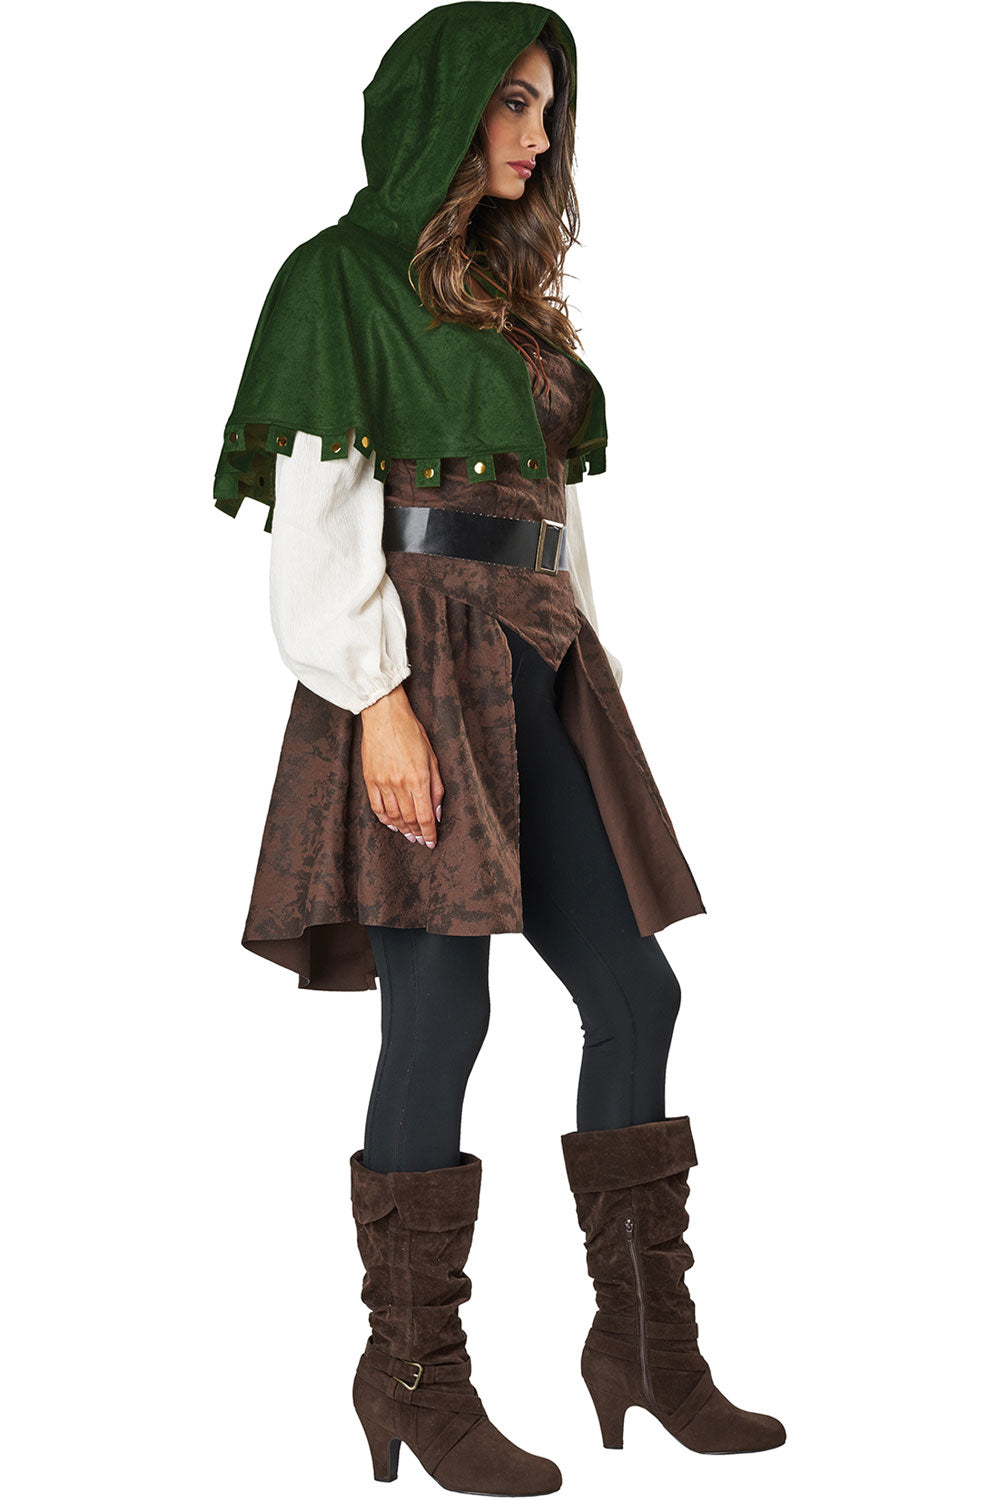 Legendary Robin Hood / Adult California Costume 5021-110